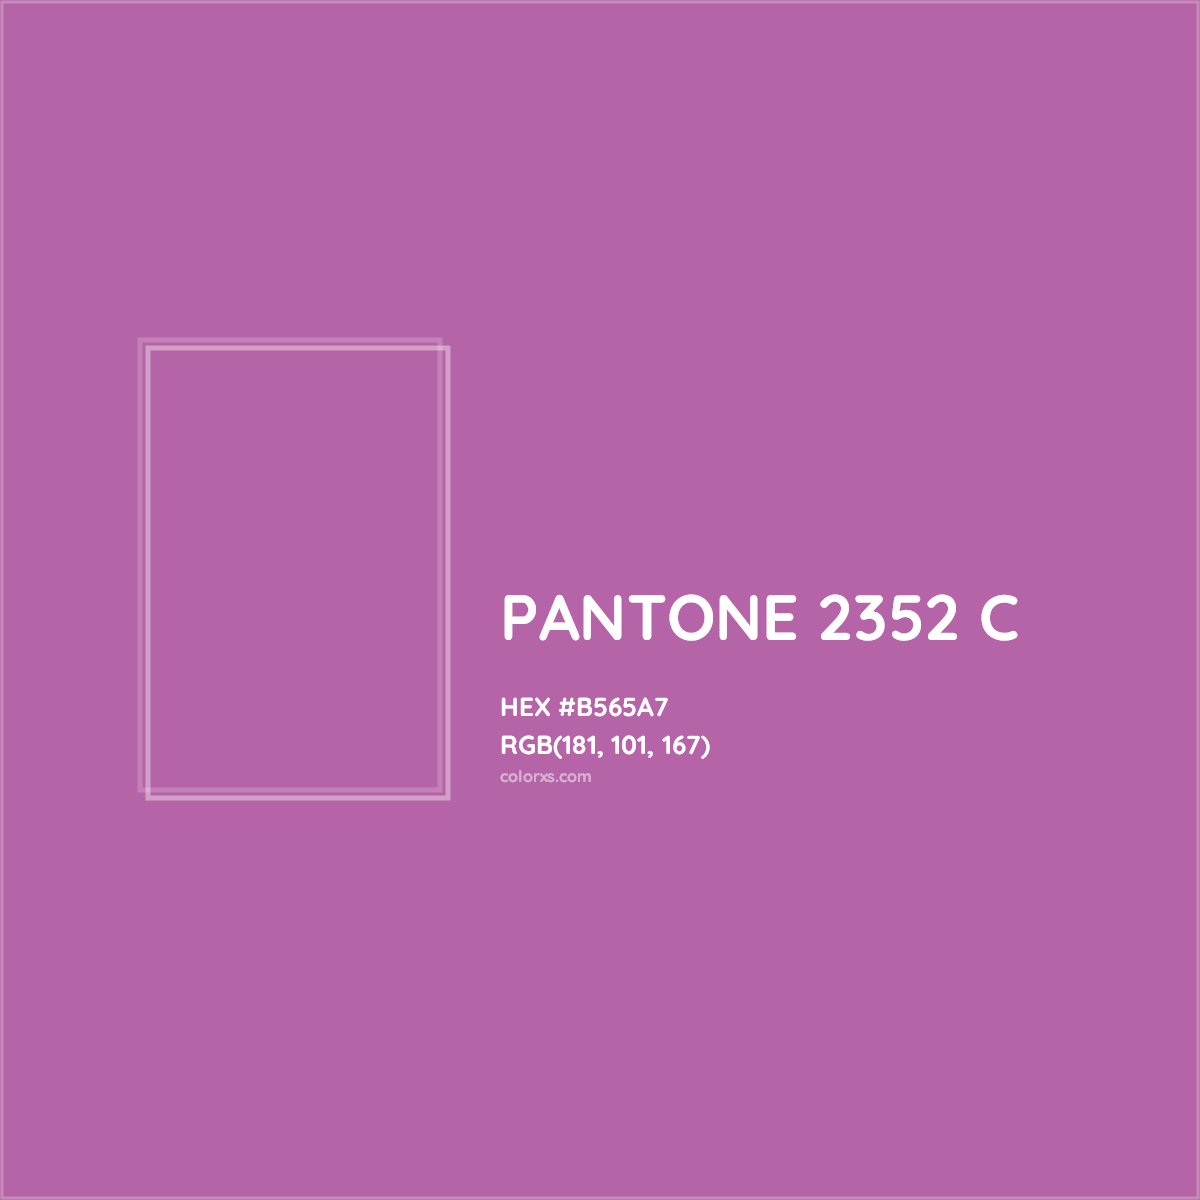 HEX #B565A7 PANTONE 2352 C CMS Pantone PMS - Color Code